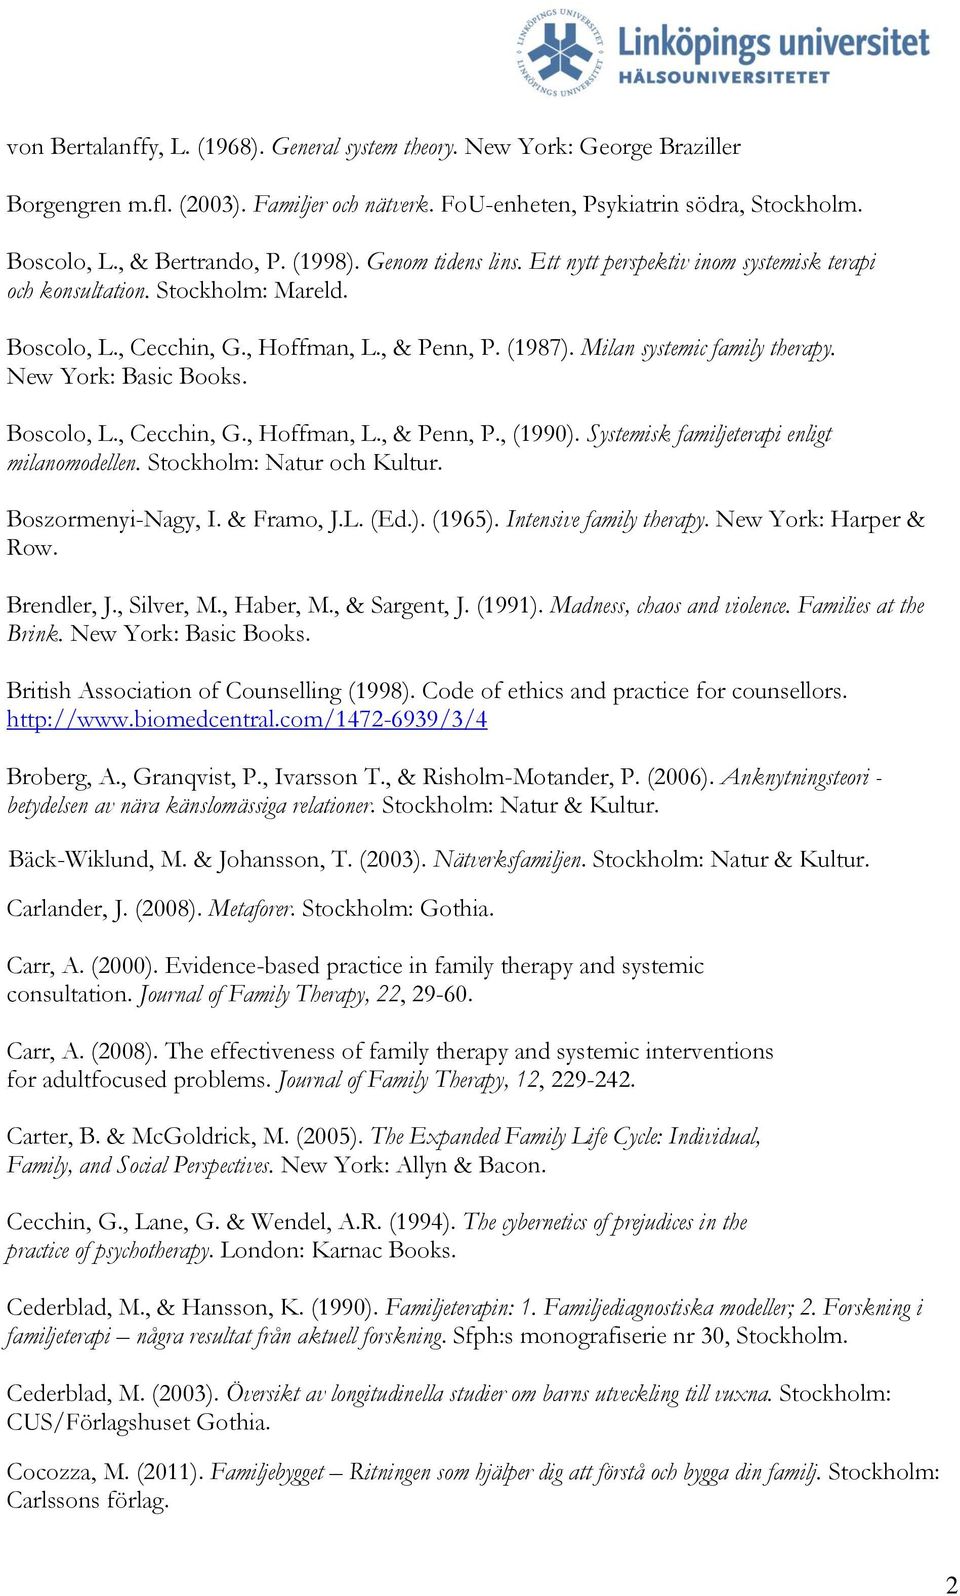 New York: Basic Books. Boscolo, L., Cecchin, G., Hoffman, L., & Penn, P., (1990). Systemisk familjeterapi enligt milanomodellen. Stockholm: Natur och Kultur. Boszormenyi-Nagy, I. & Framo, J.L. (Ed.). (1965).